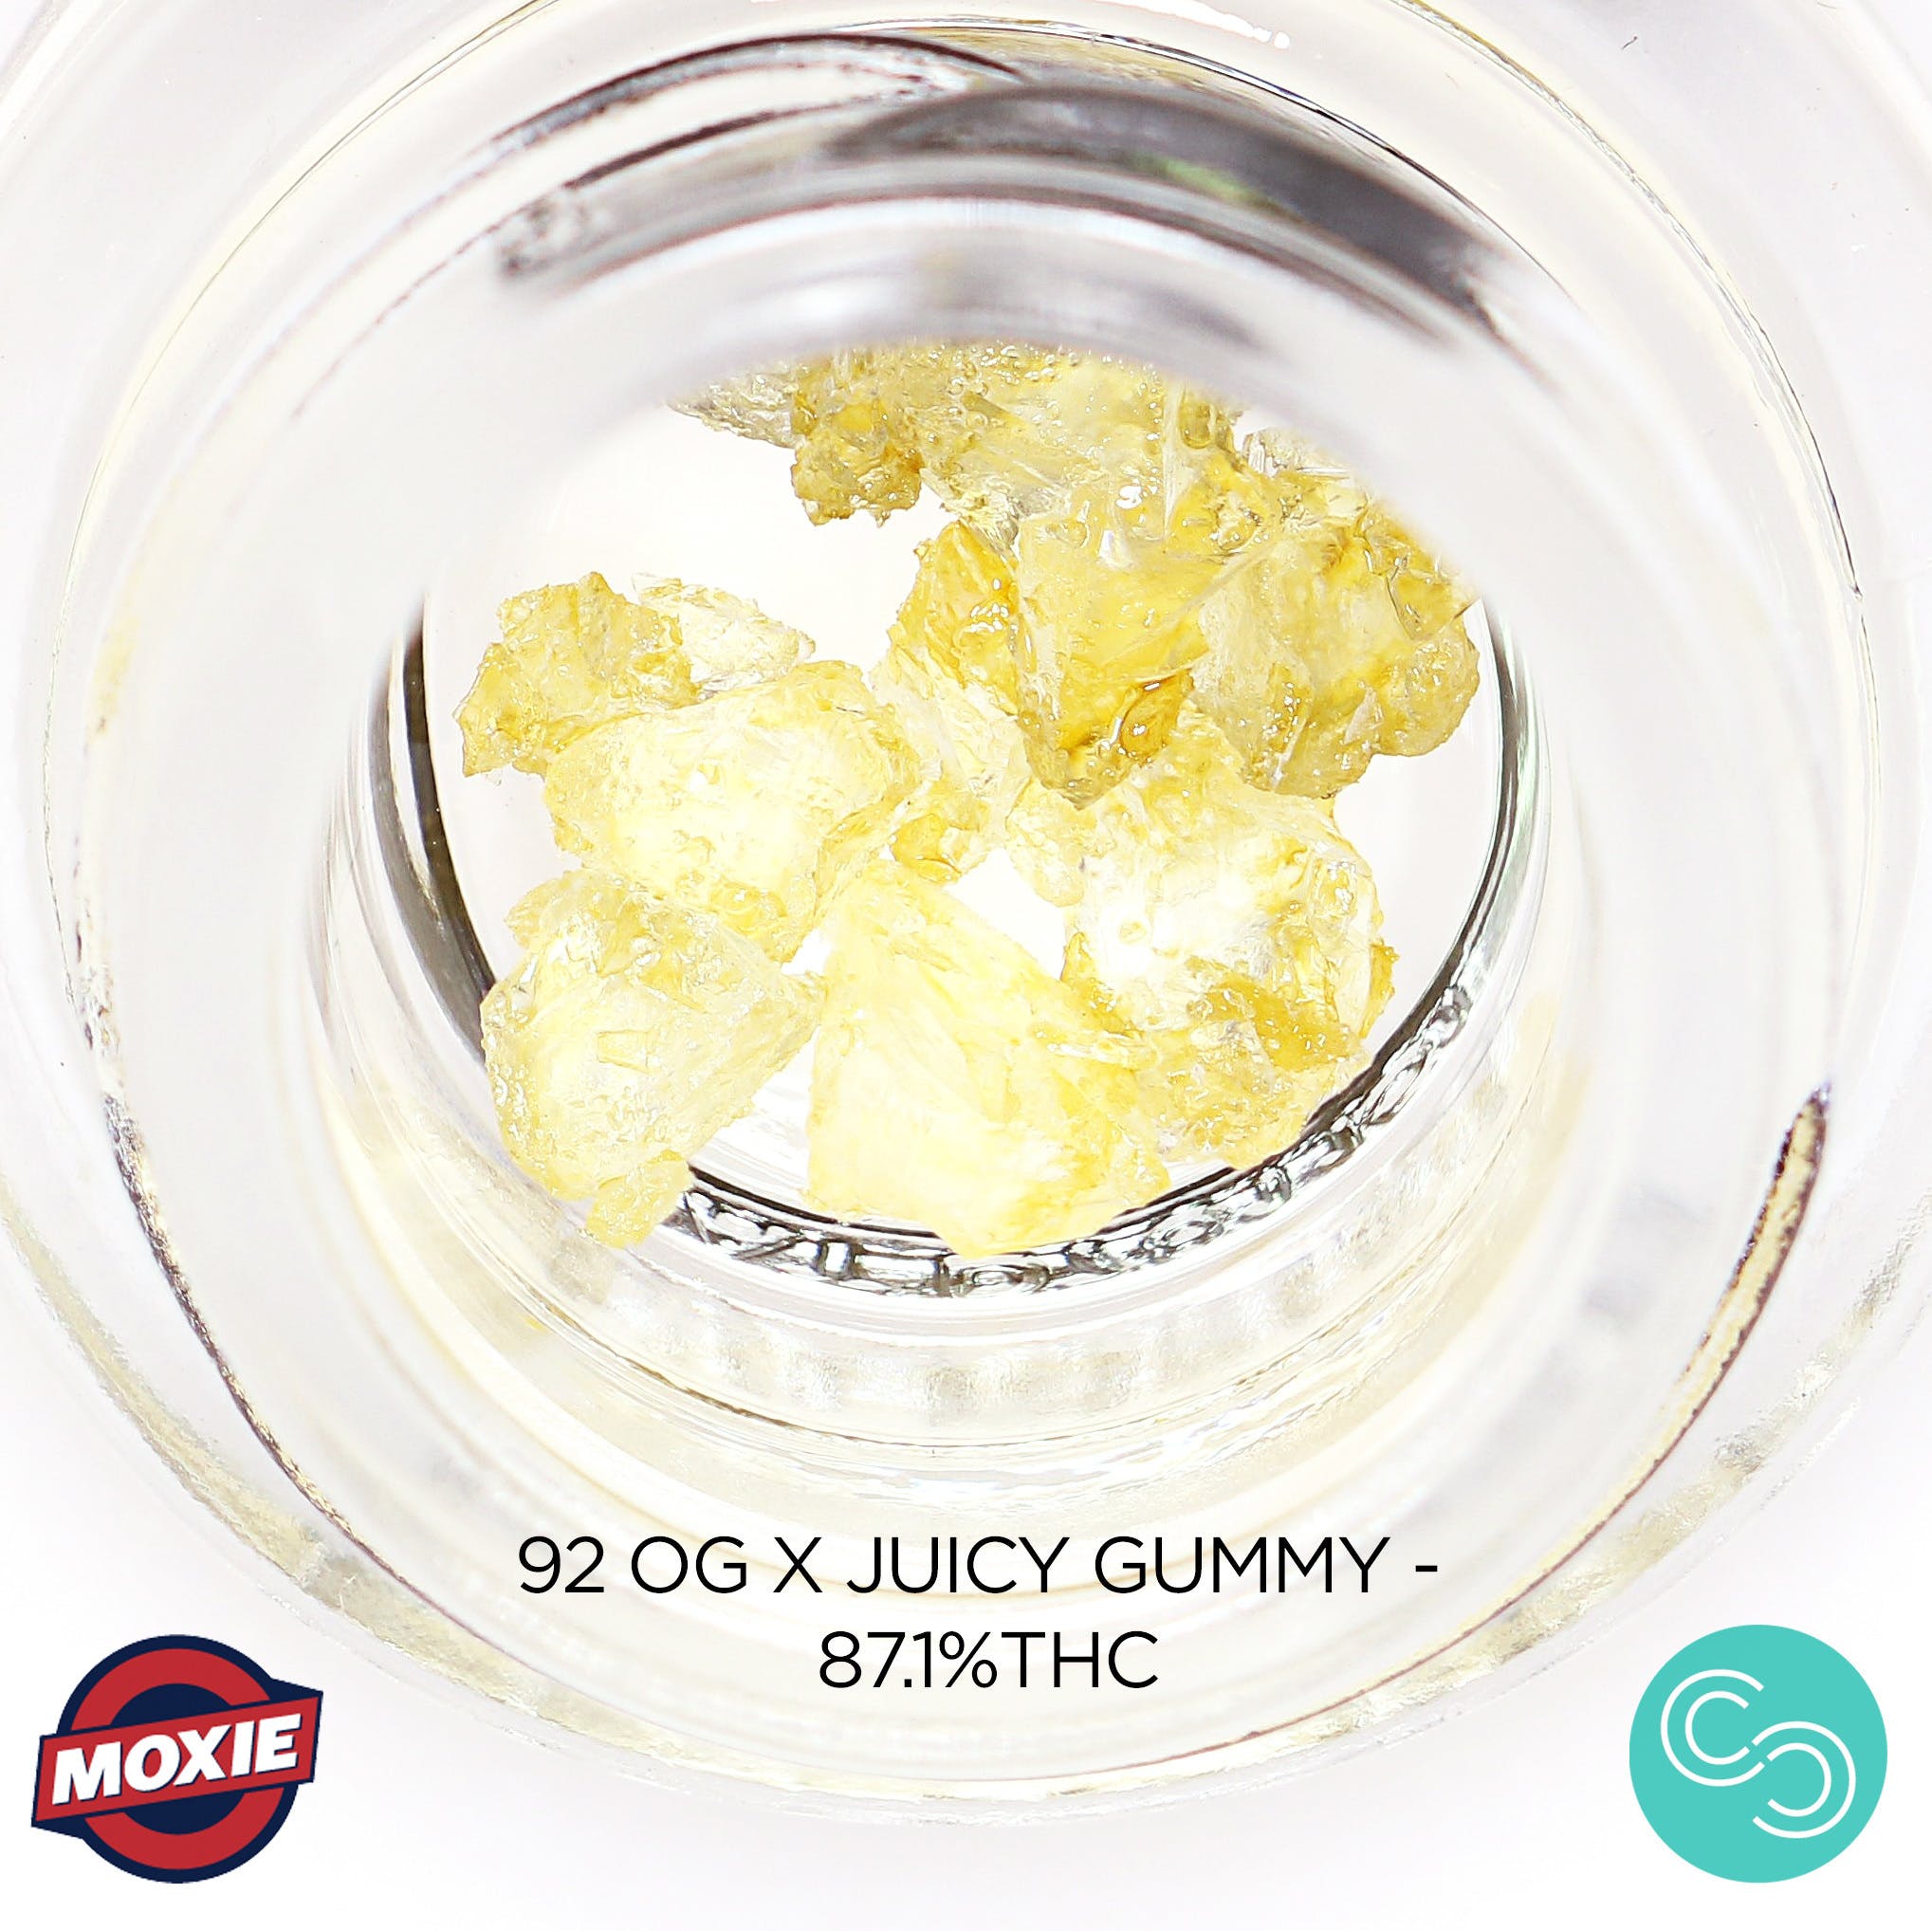 Moxie - 92 OG x Juicy Gummy - 87.1% THC